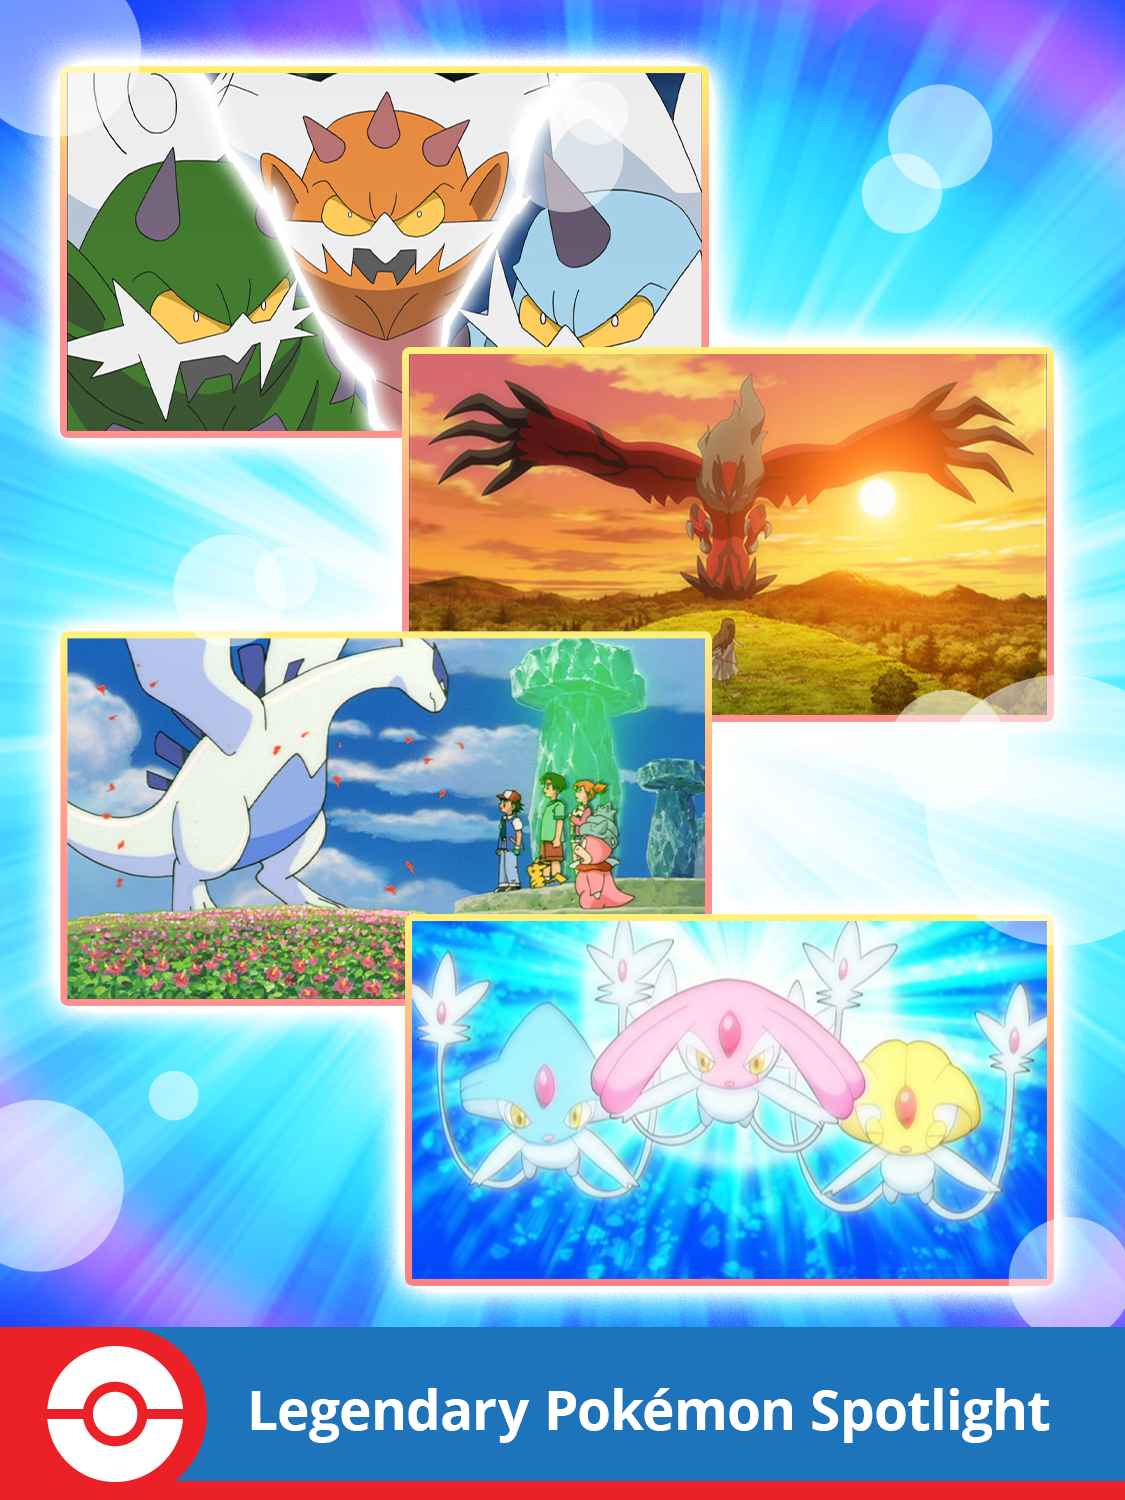 Legendary Pokémon Spotlight